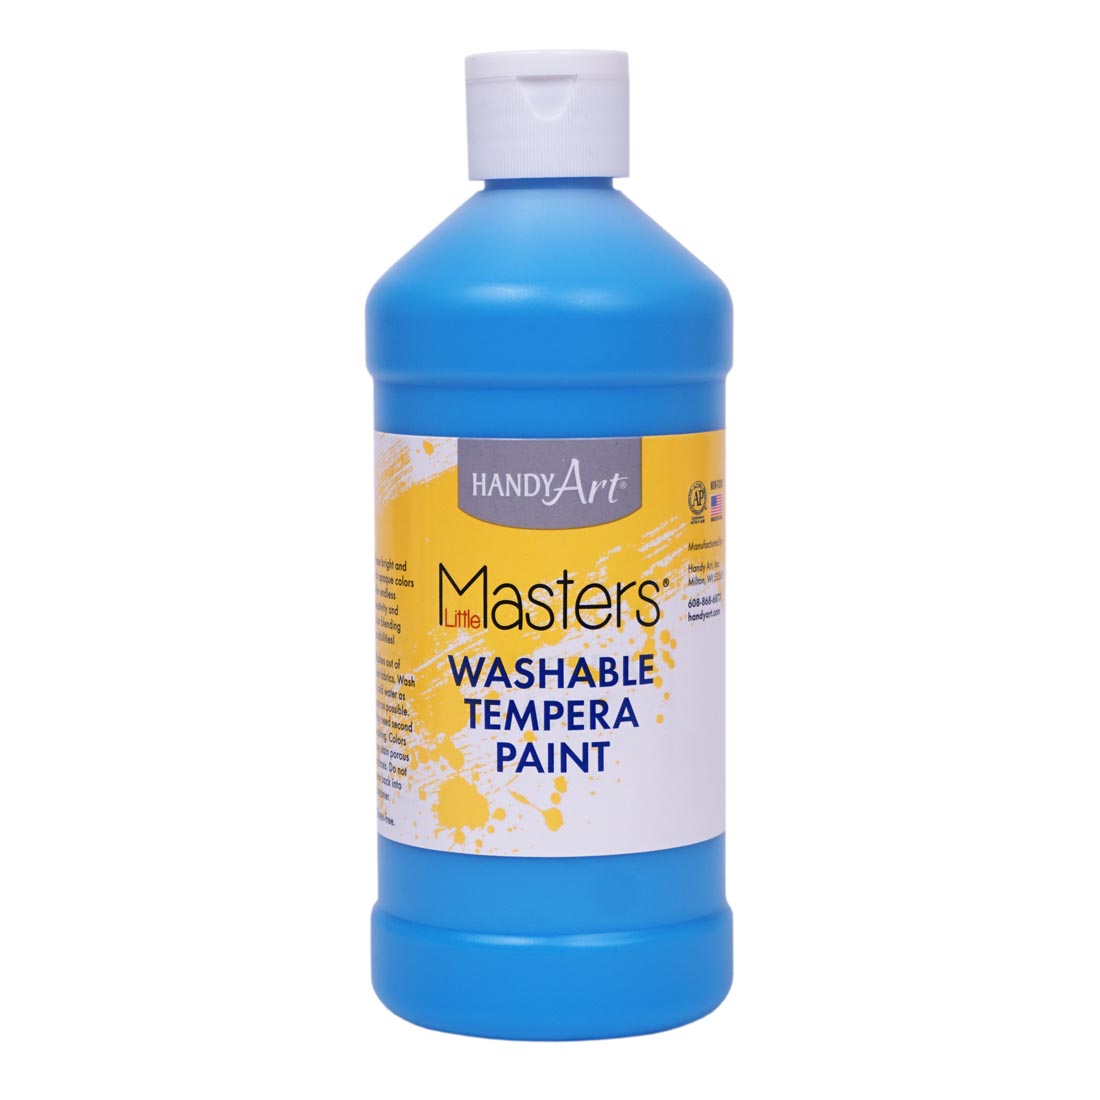 Pint bottle of Light Blue Handy Art Little Masters Washable Tempera Paint